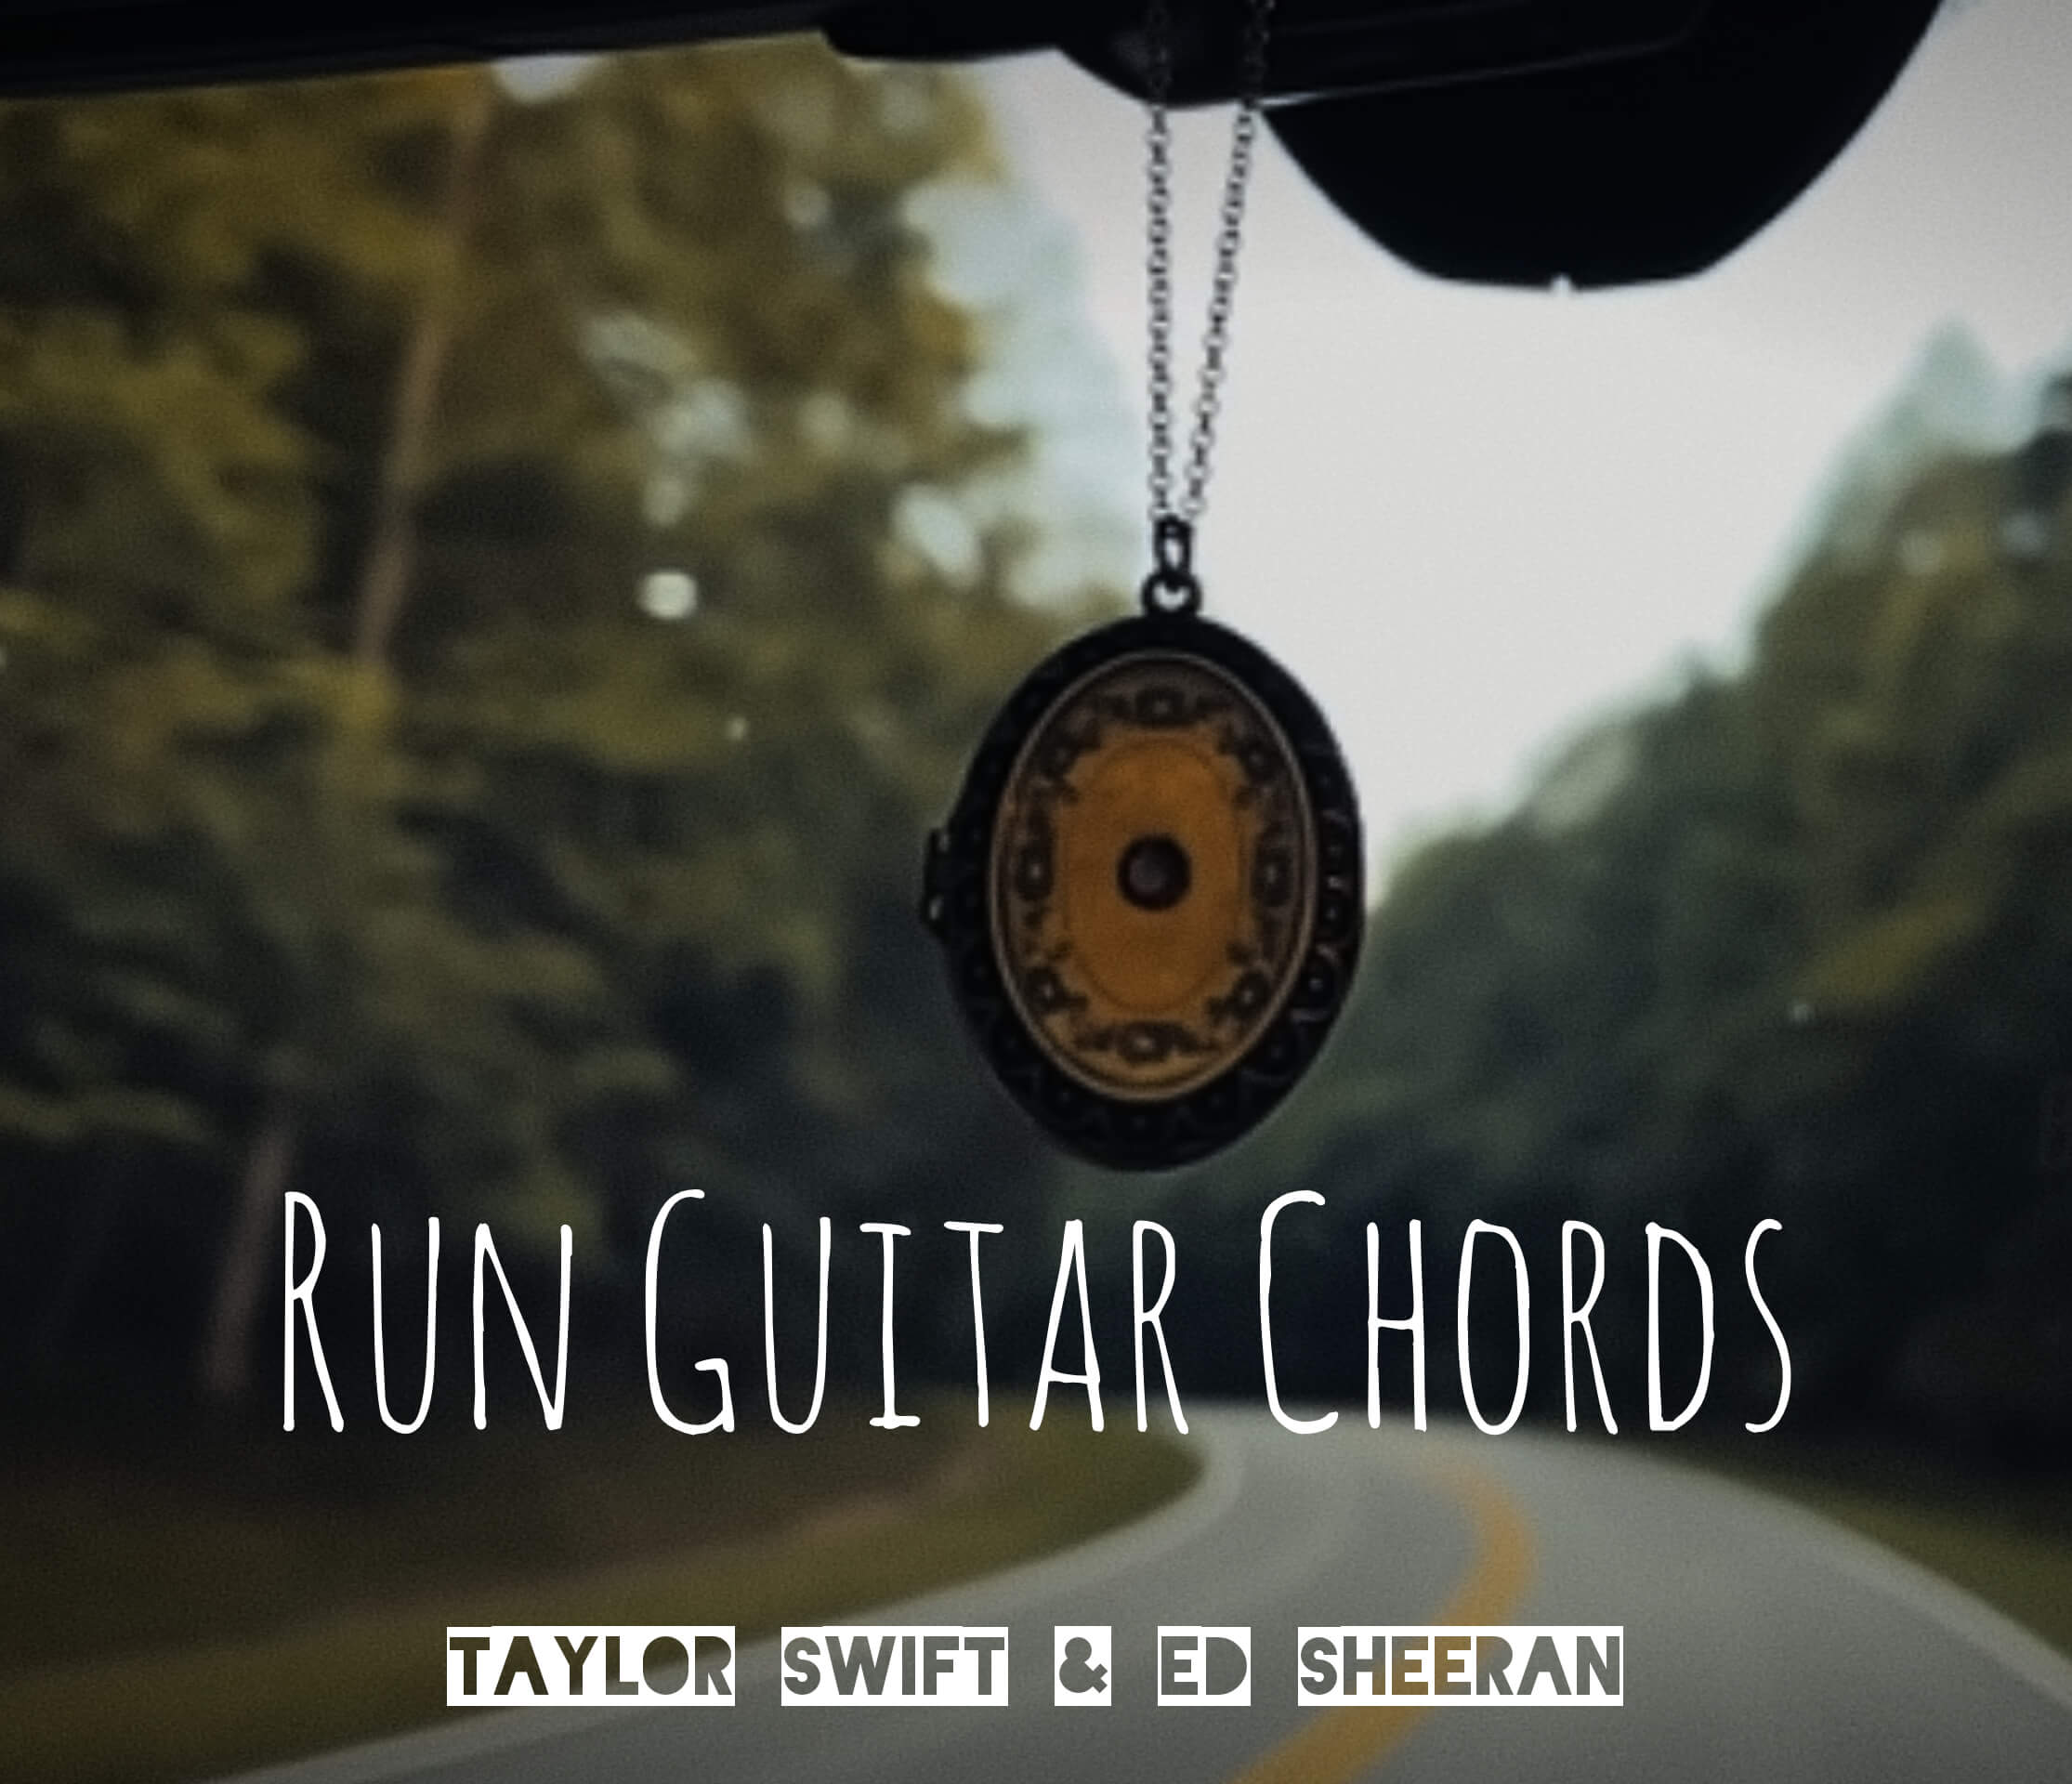 Run guitar chords taylor swift